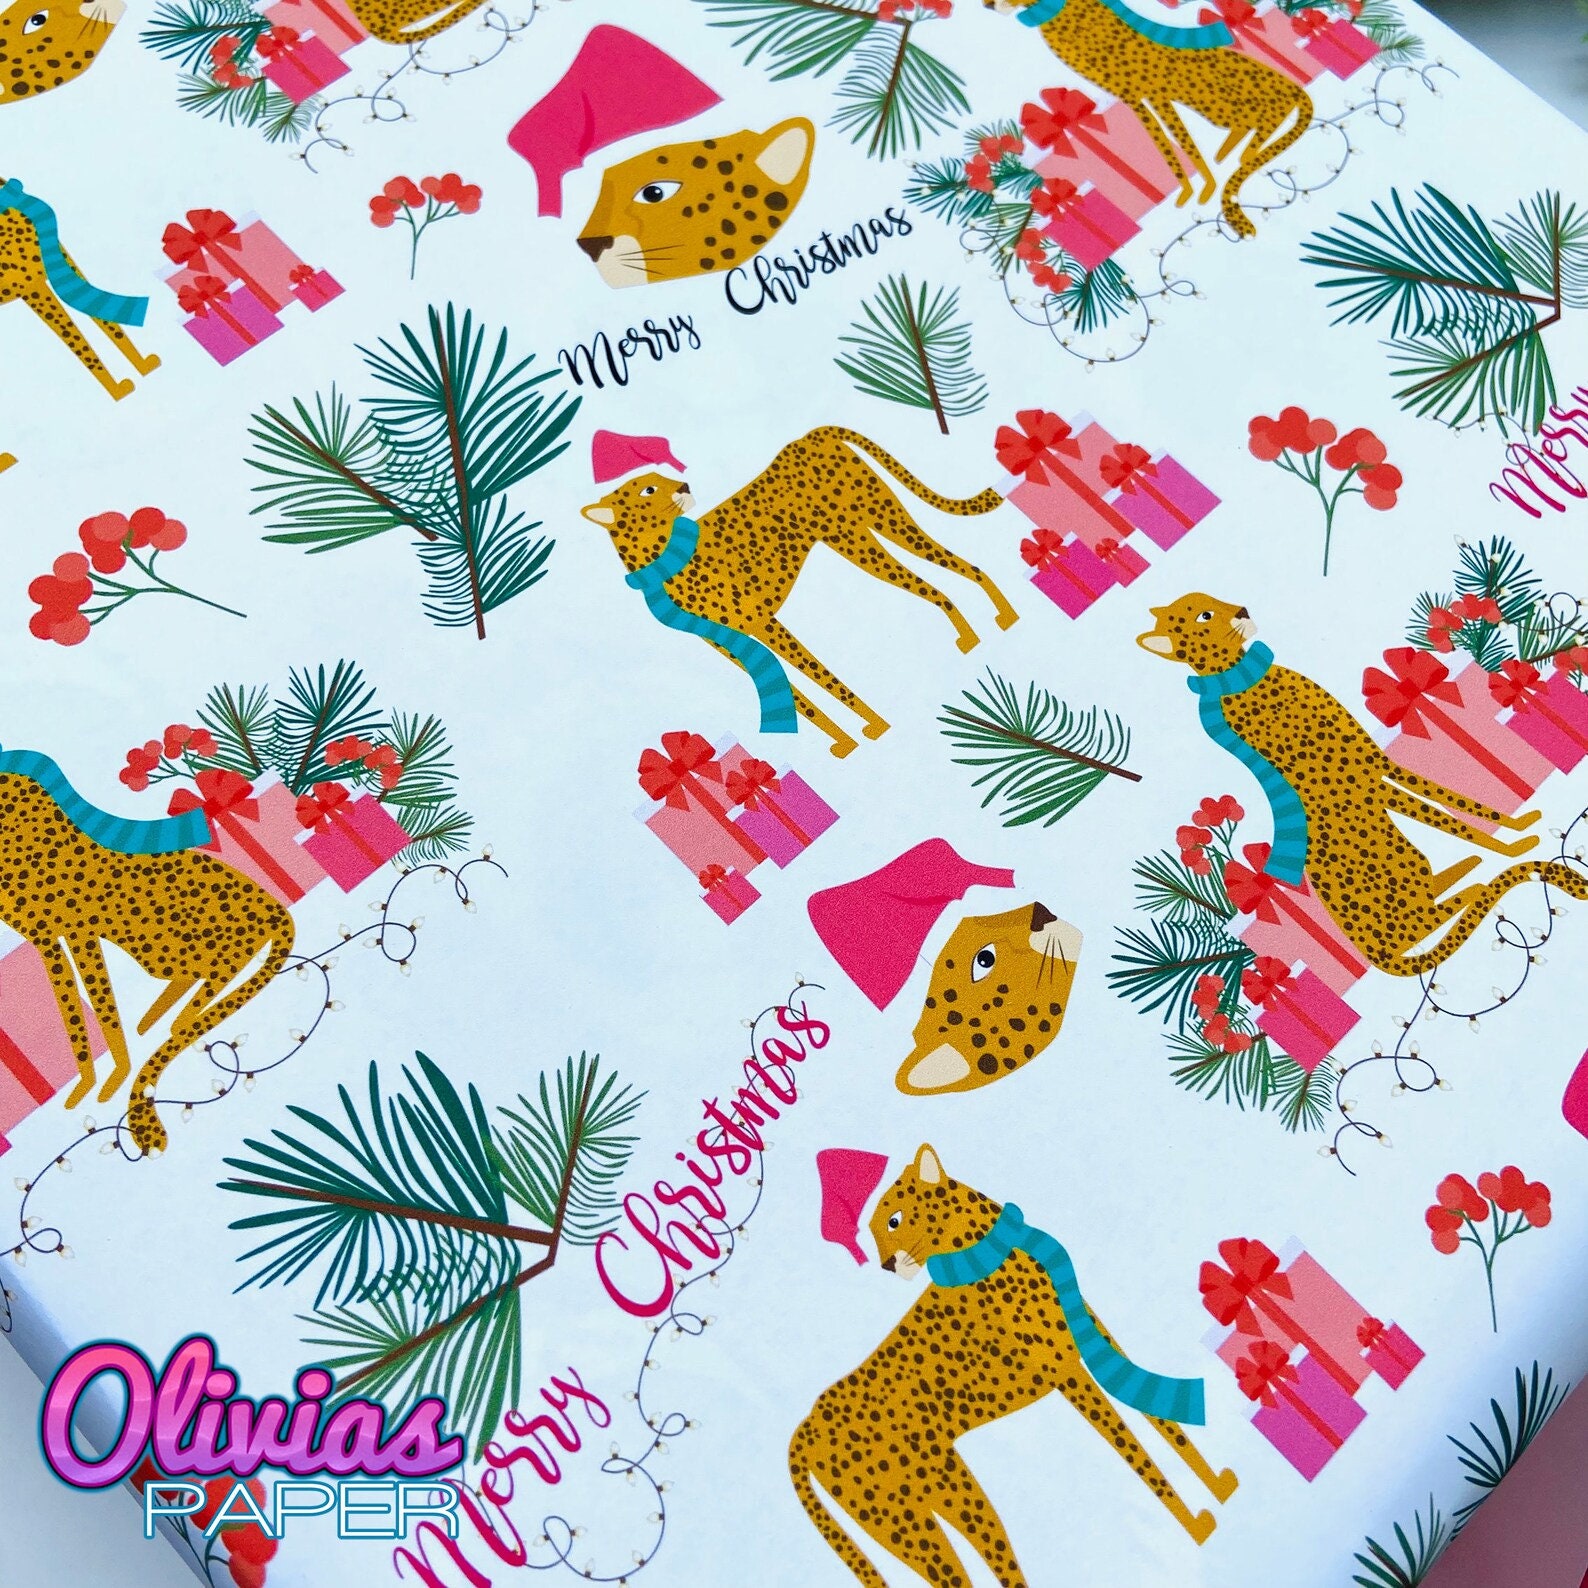 Hot Pink Cheetah Gift Wrap, 24x85' Roll